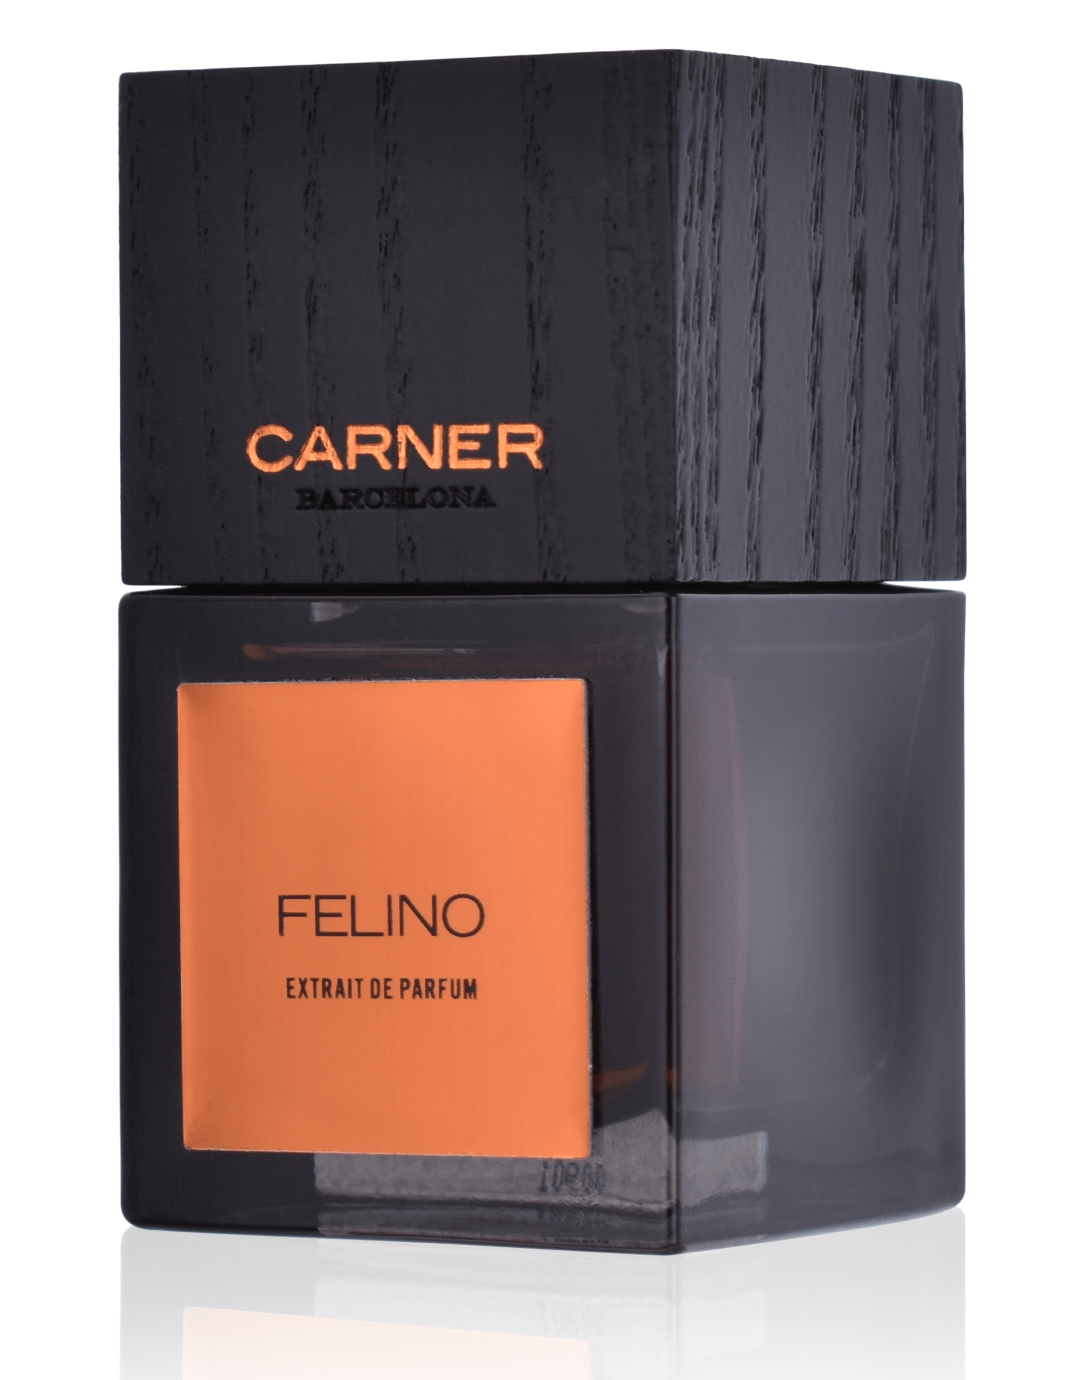 Carner Barcelona Felino 5 ml Extrait de Parfum Abfüllung     